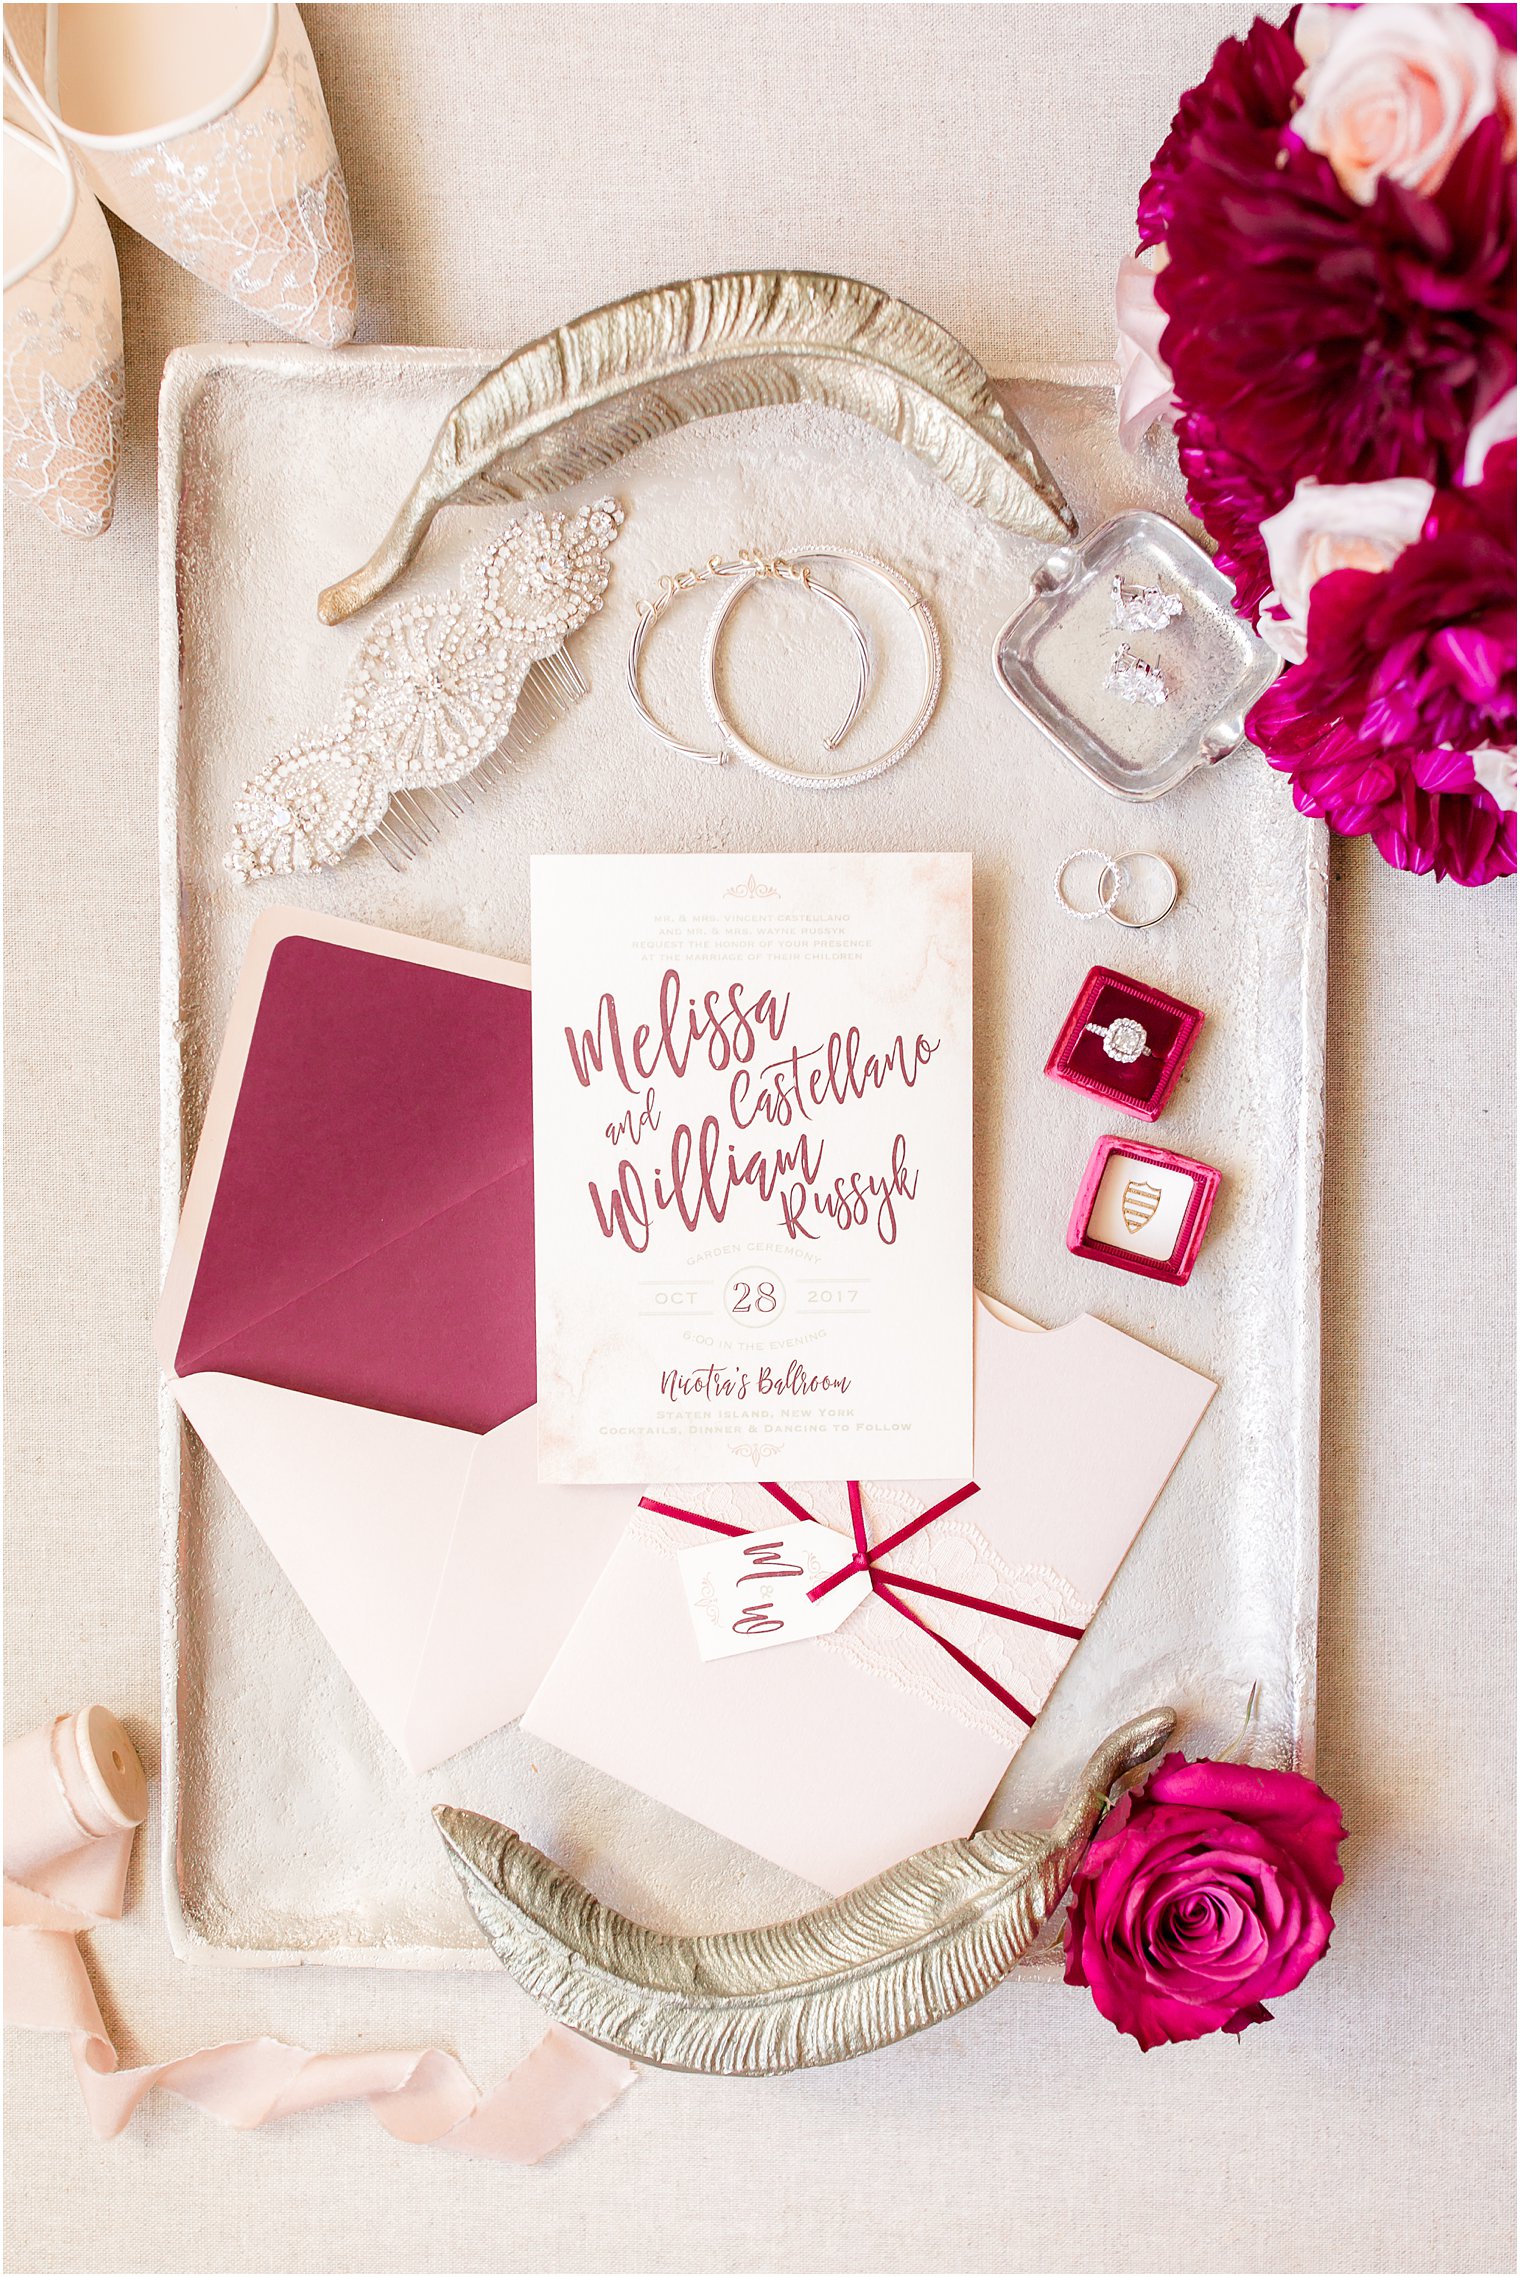 Fall wedding invitation by Art Paper Scissors